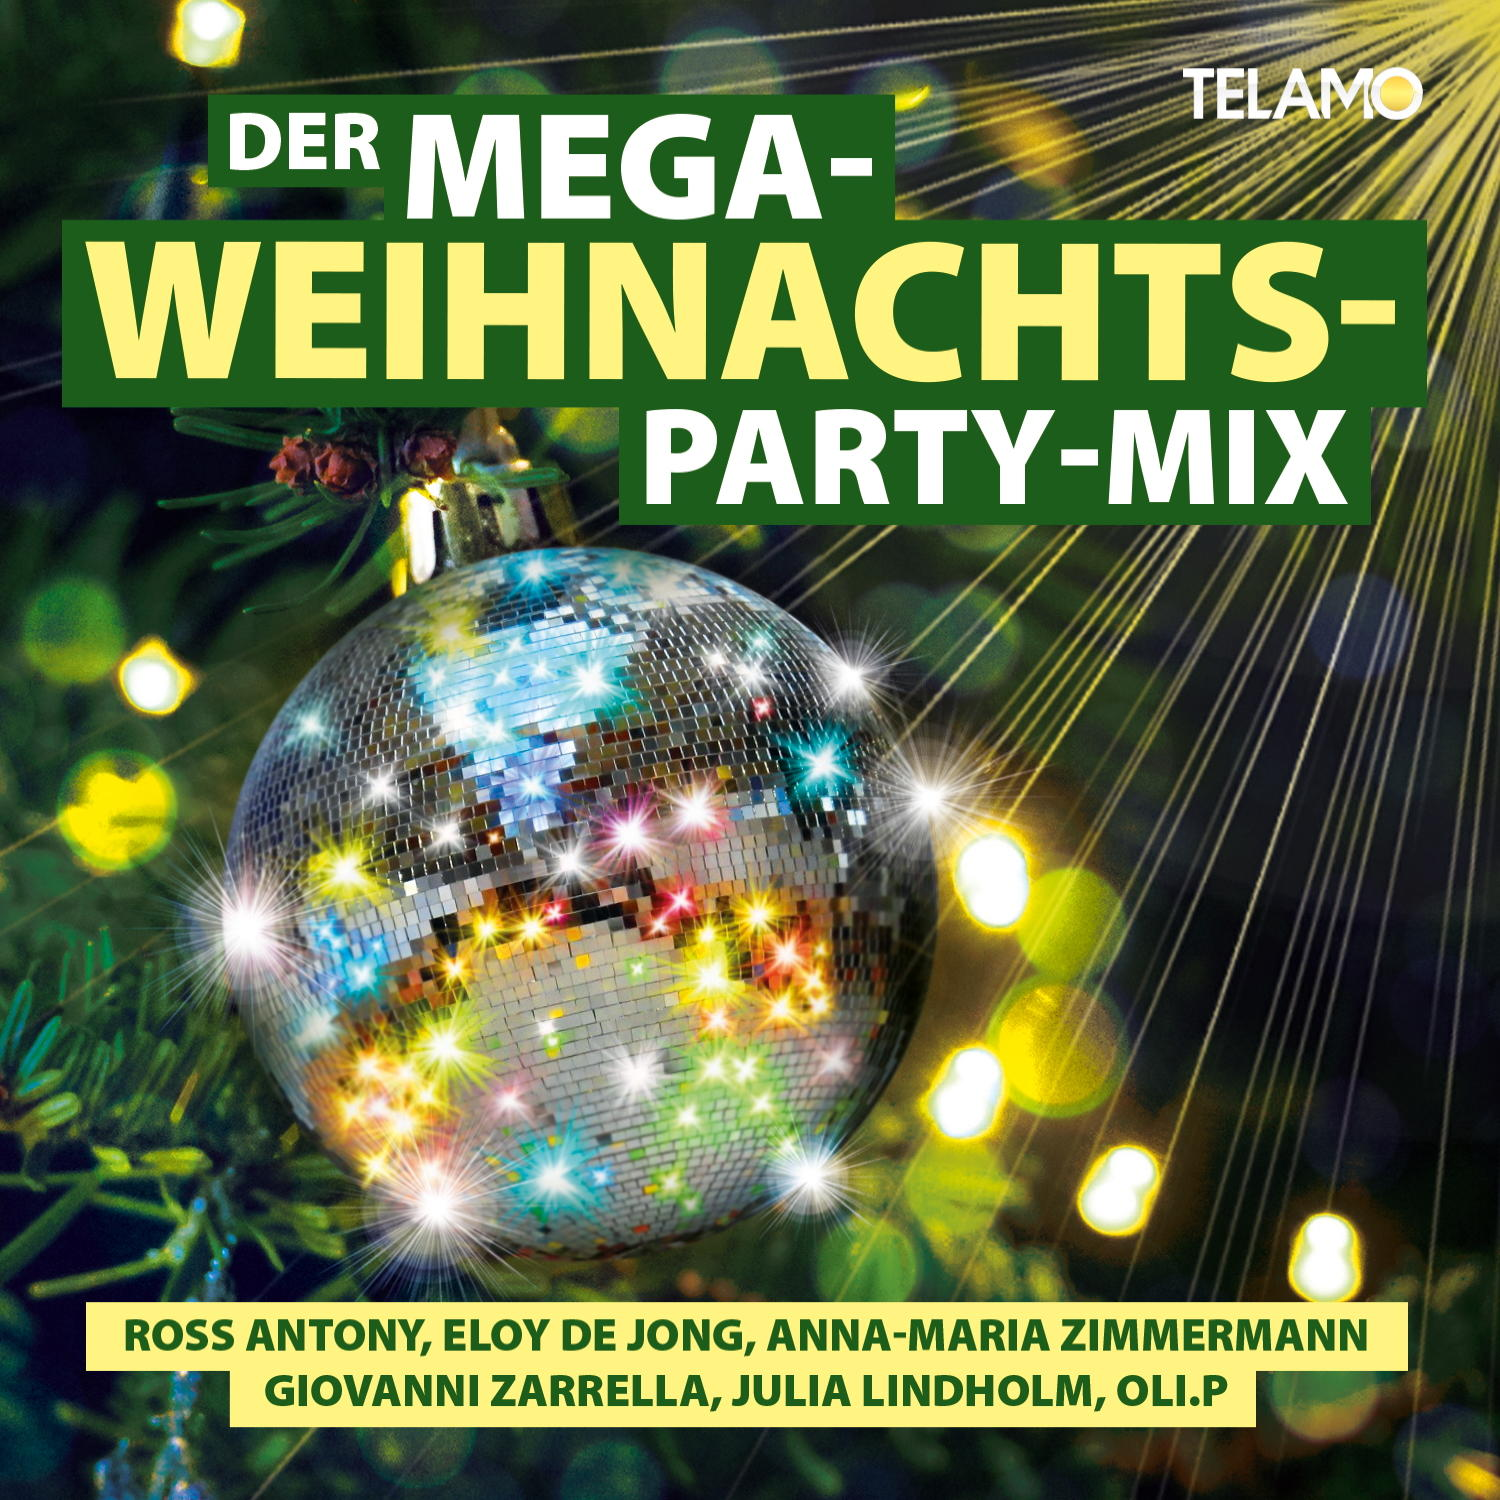 VARIOUS - Der Mega Weihnachts (CD) - Party-Mix